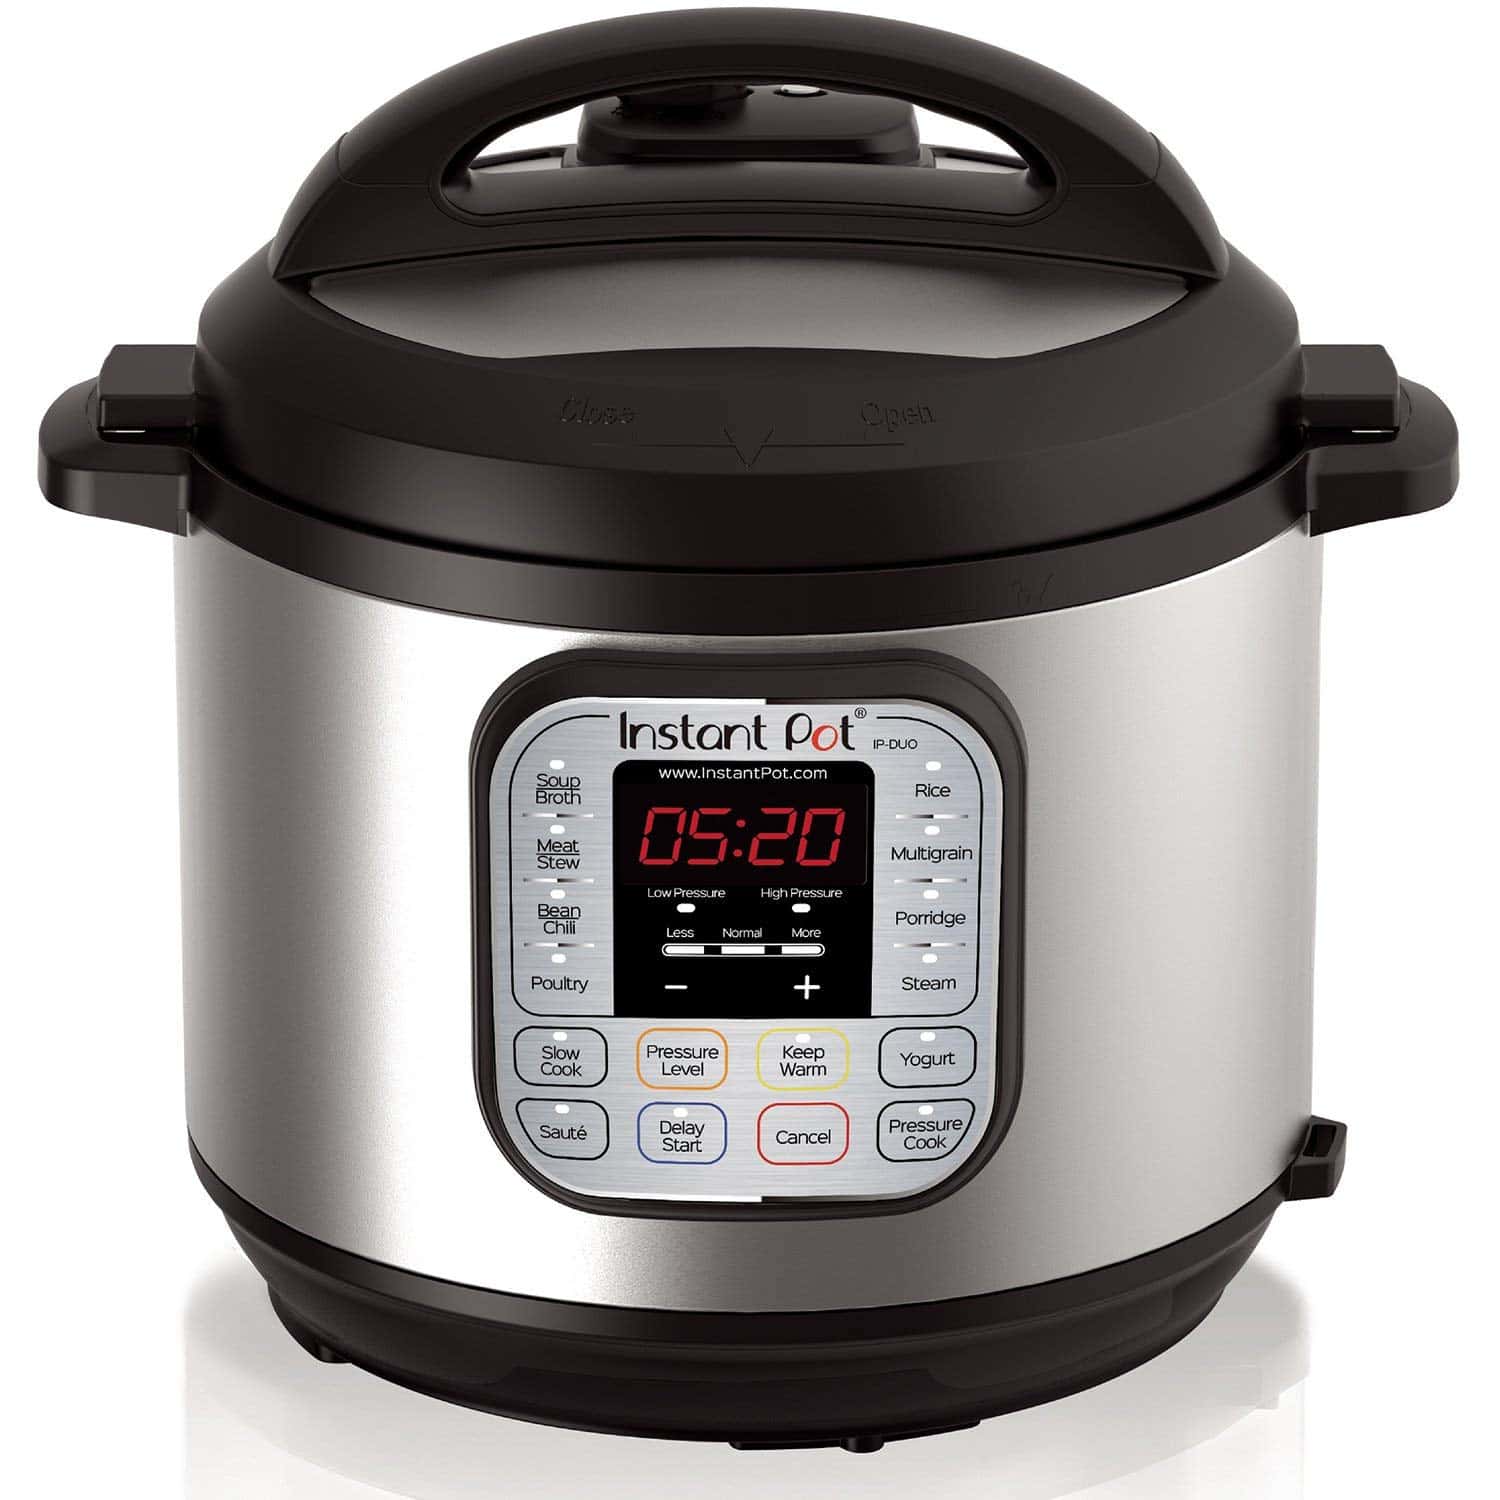 an instant pot brand pressure cooker